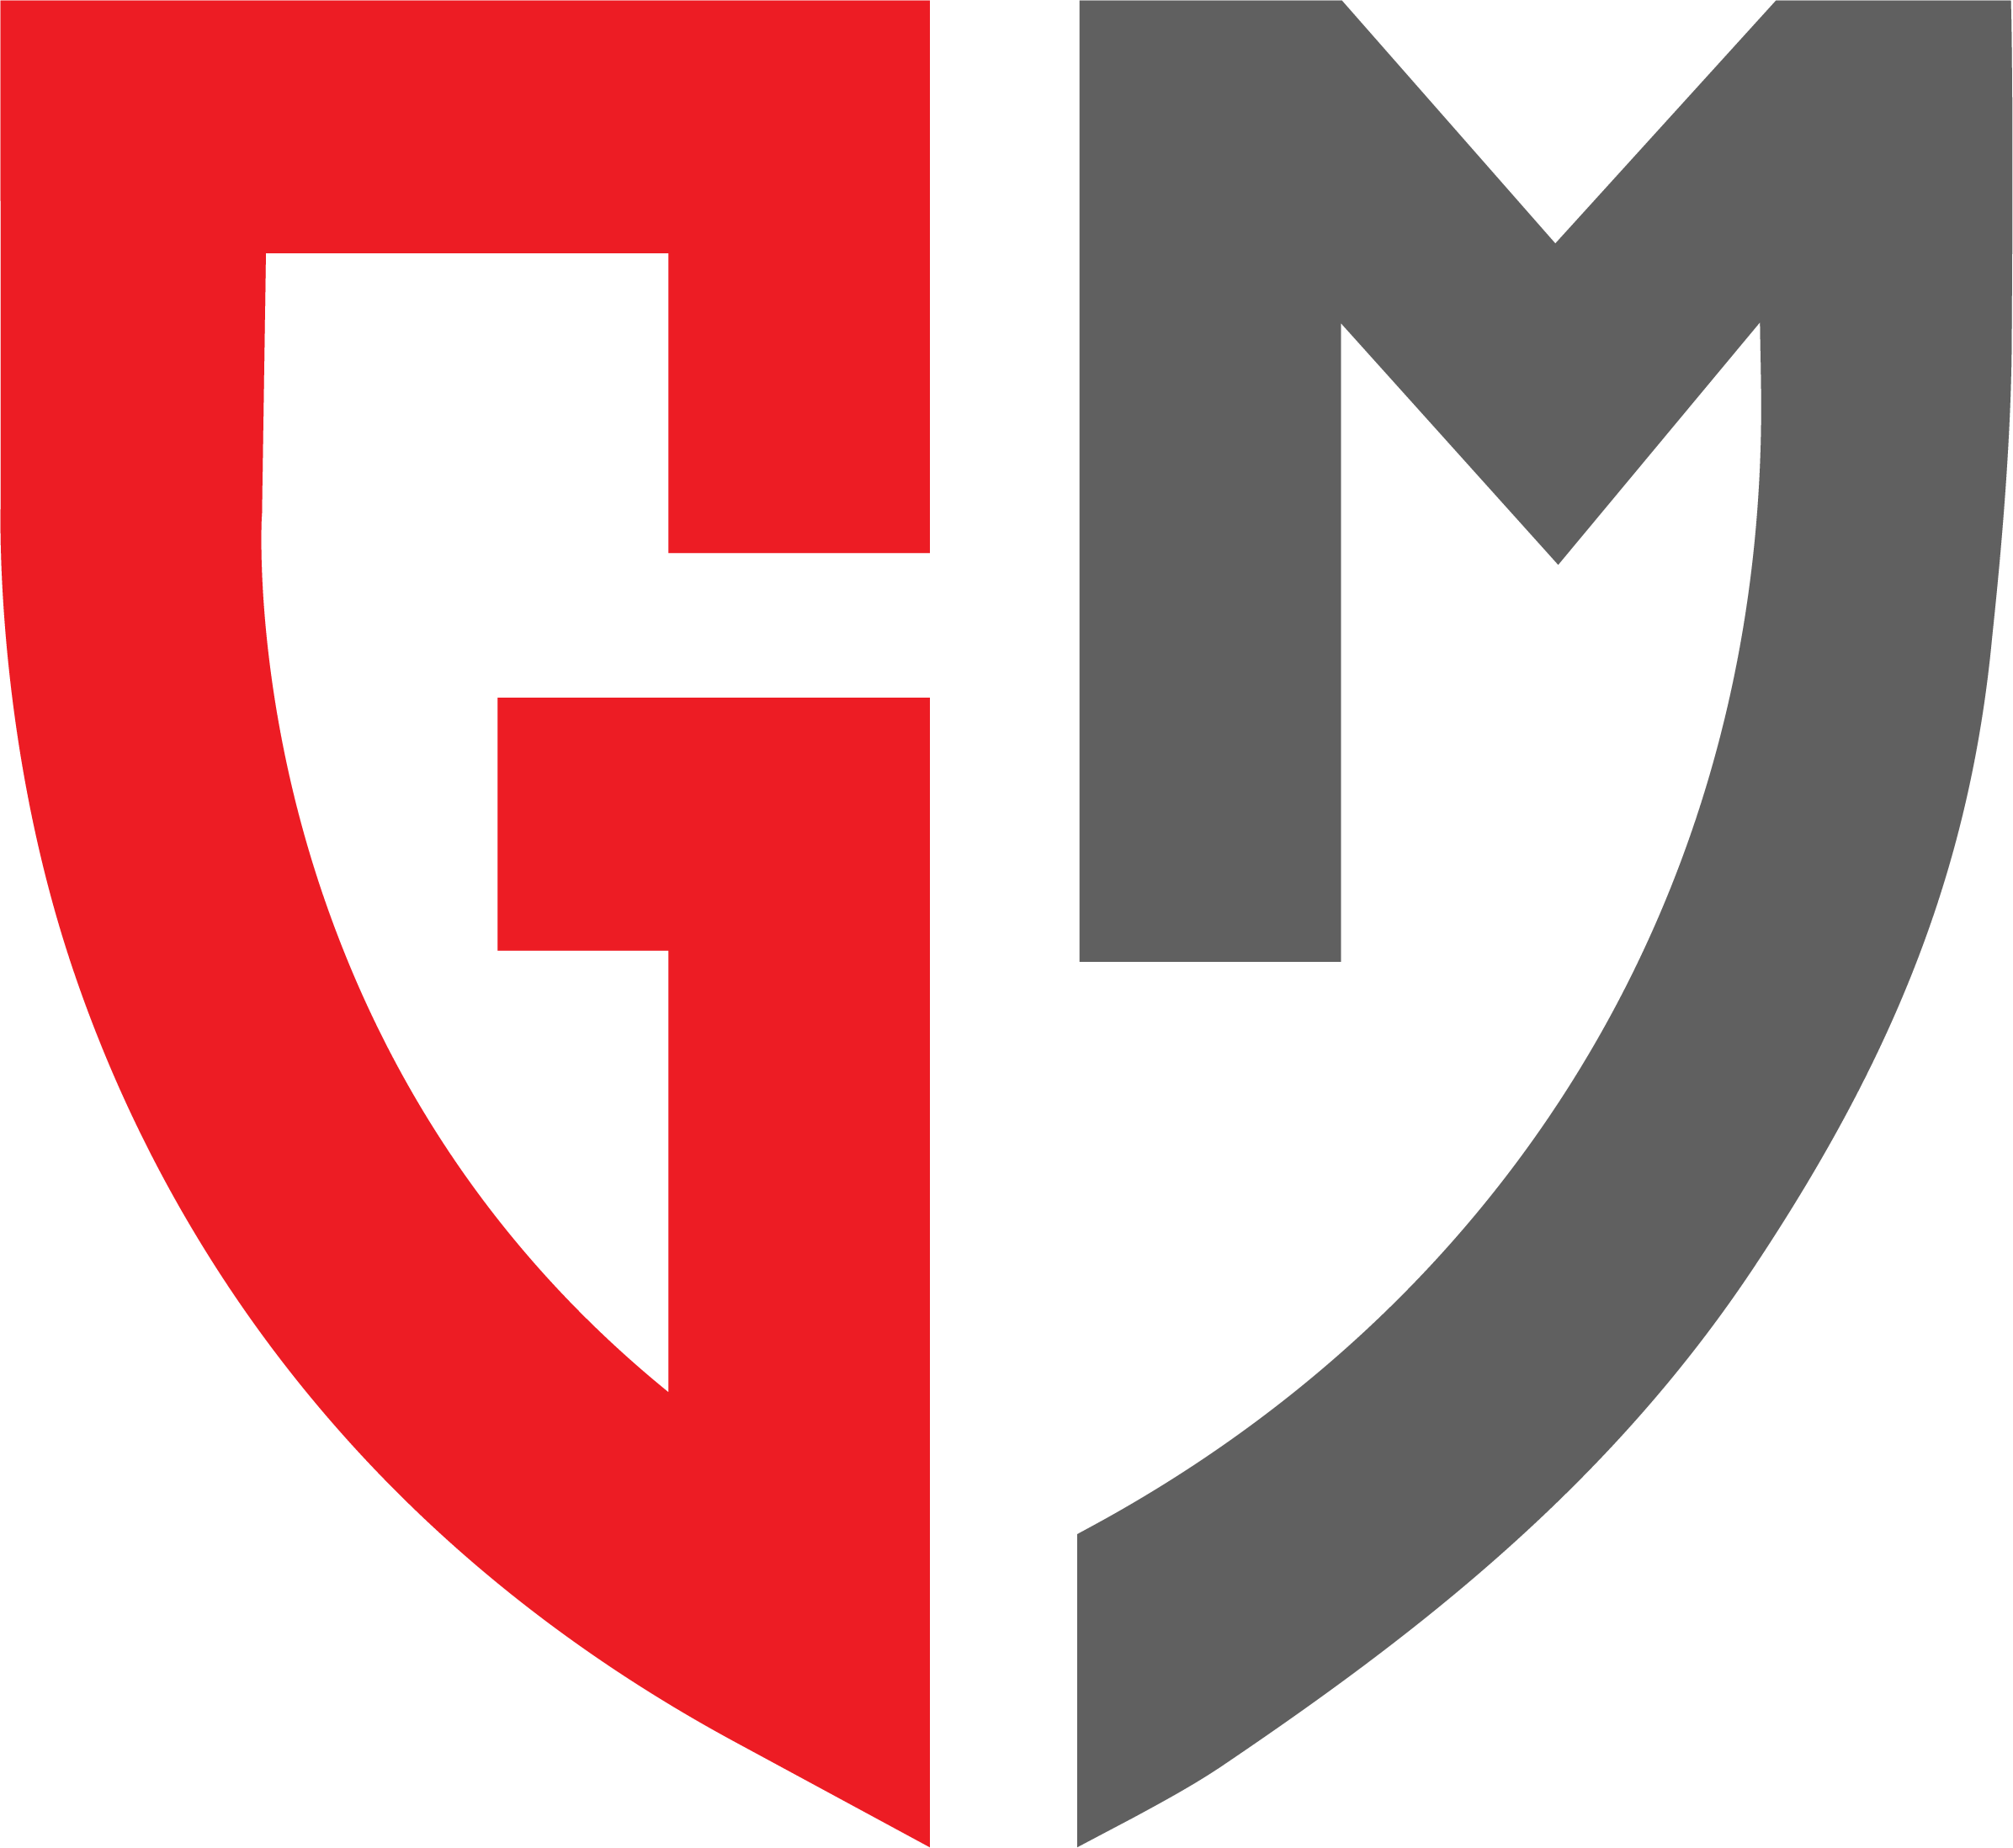 GM Educational Logo